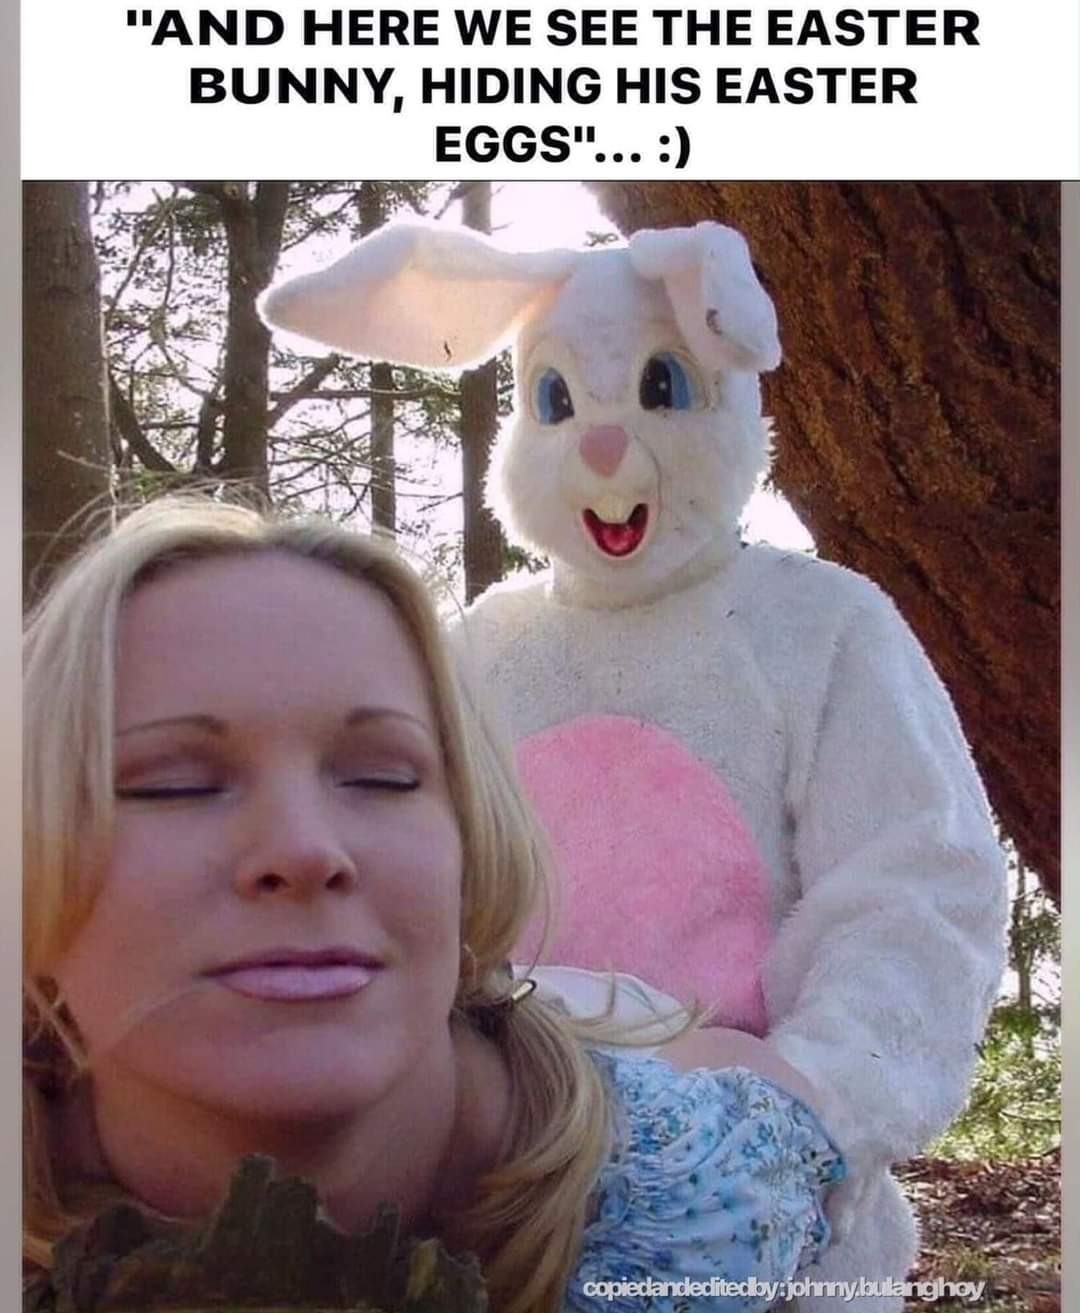 Happy Easter - meme